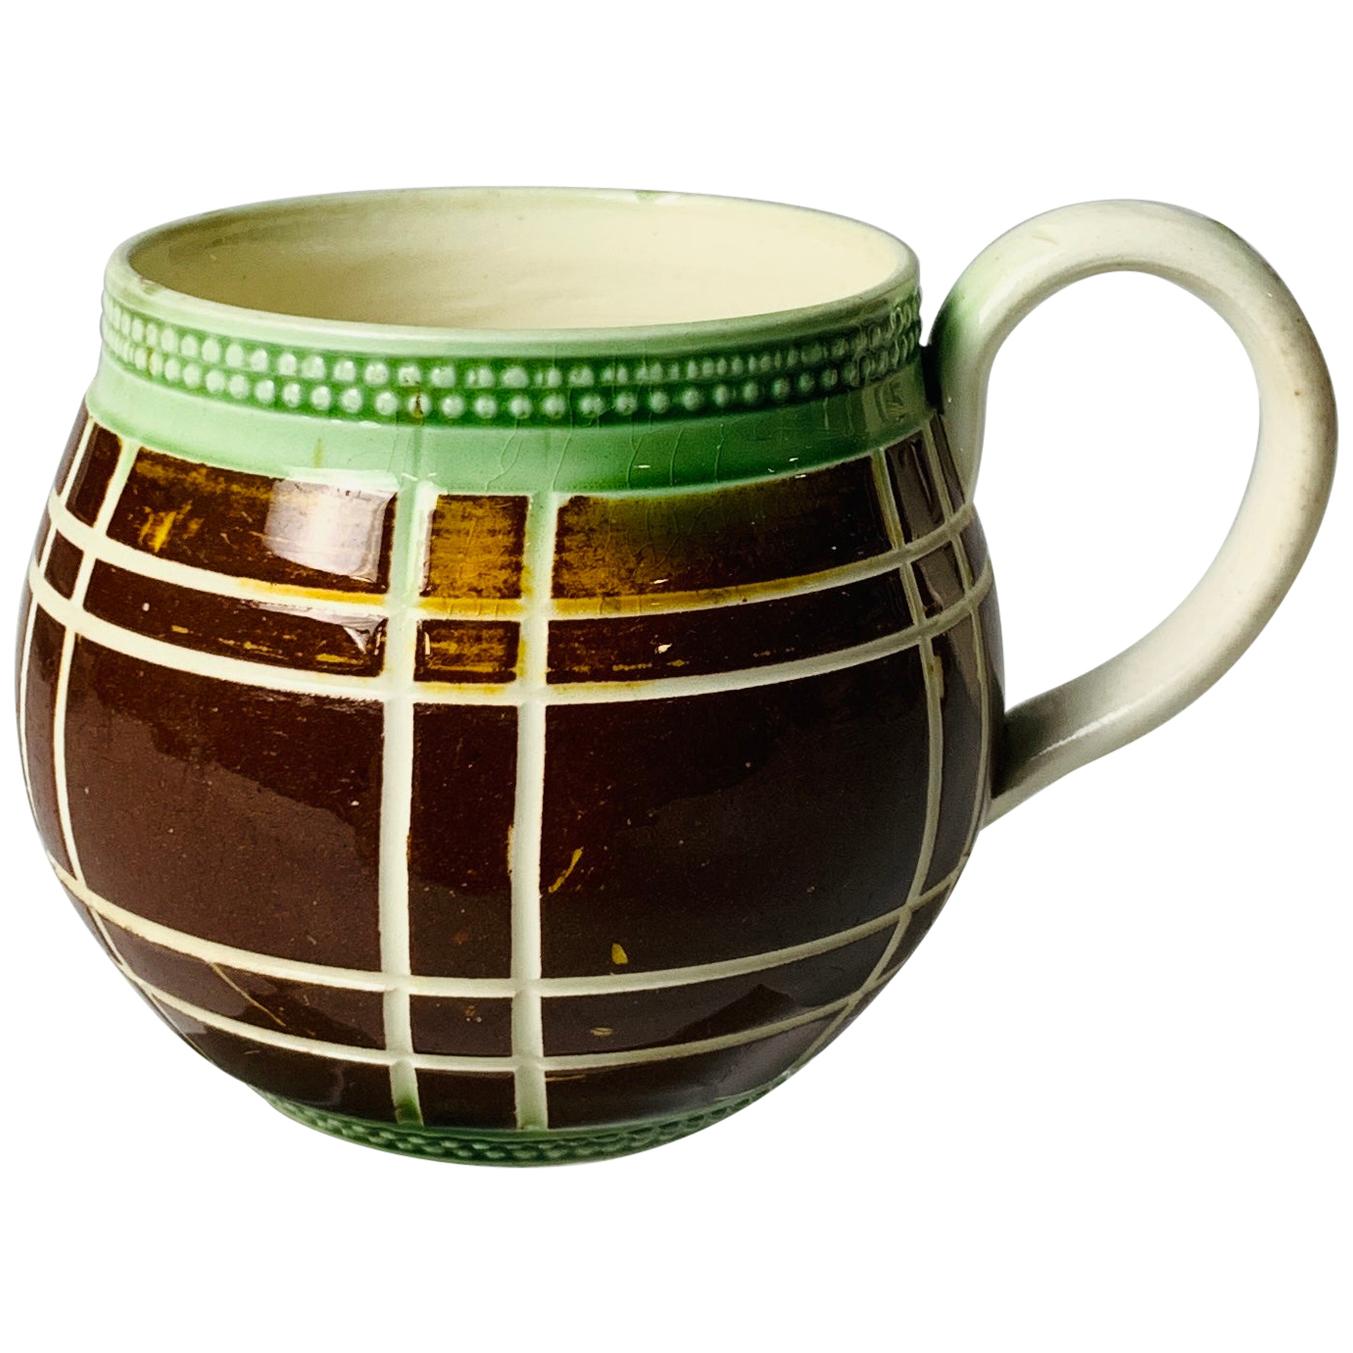 Mochaware Cup, Made in England, circa 1825